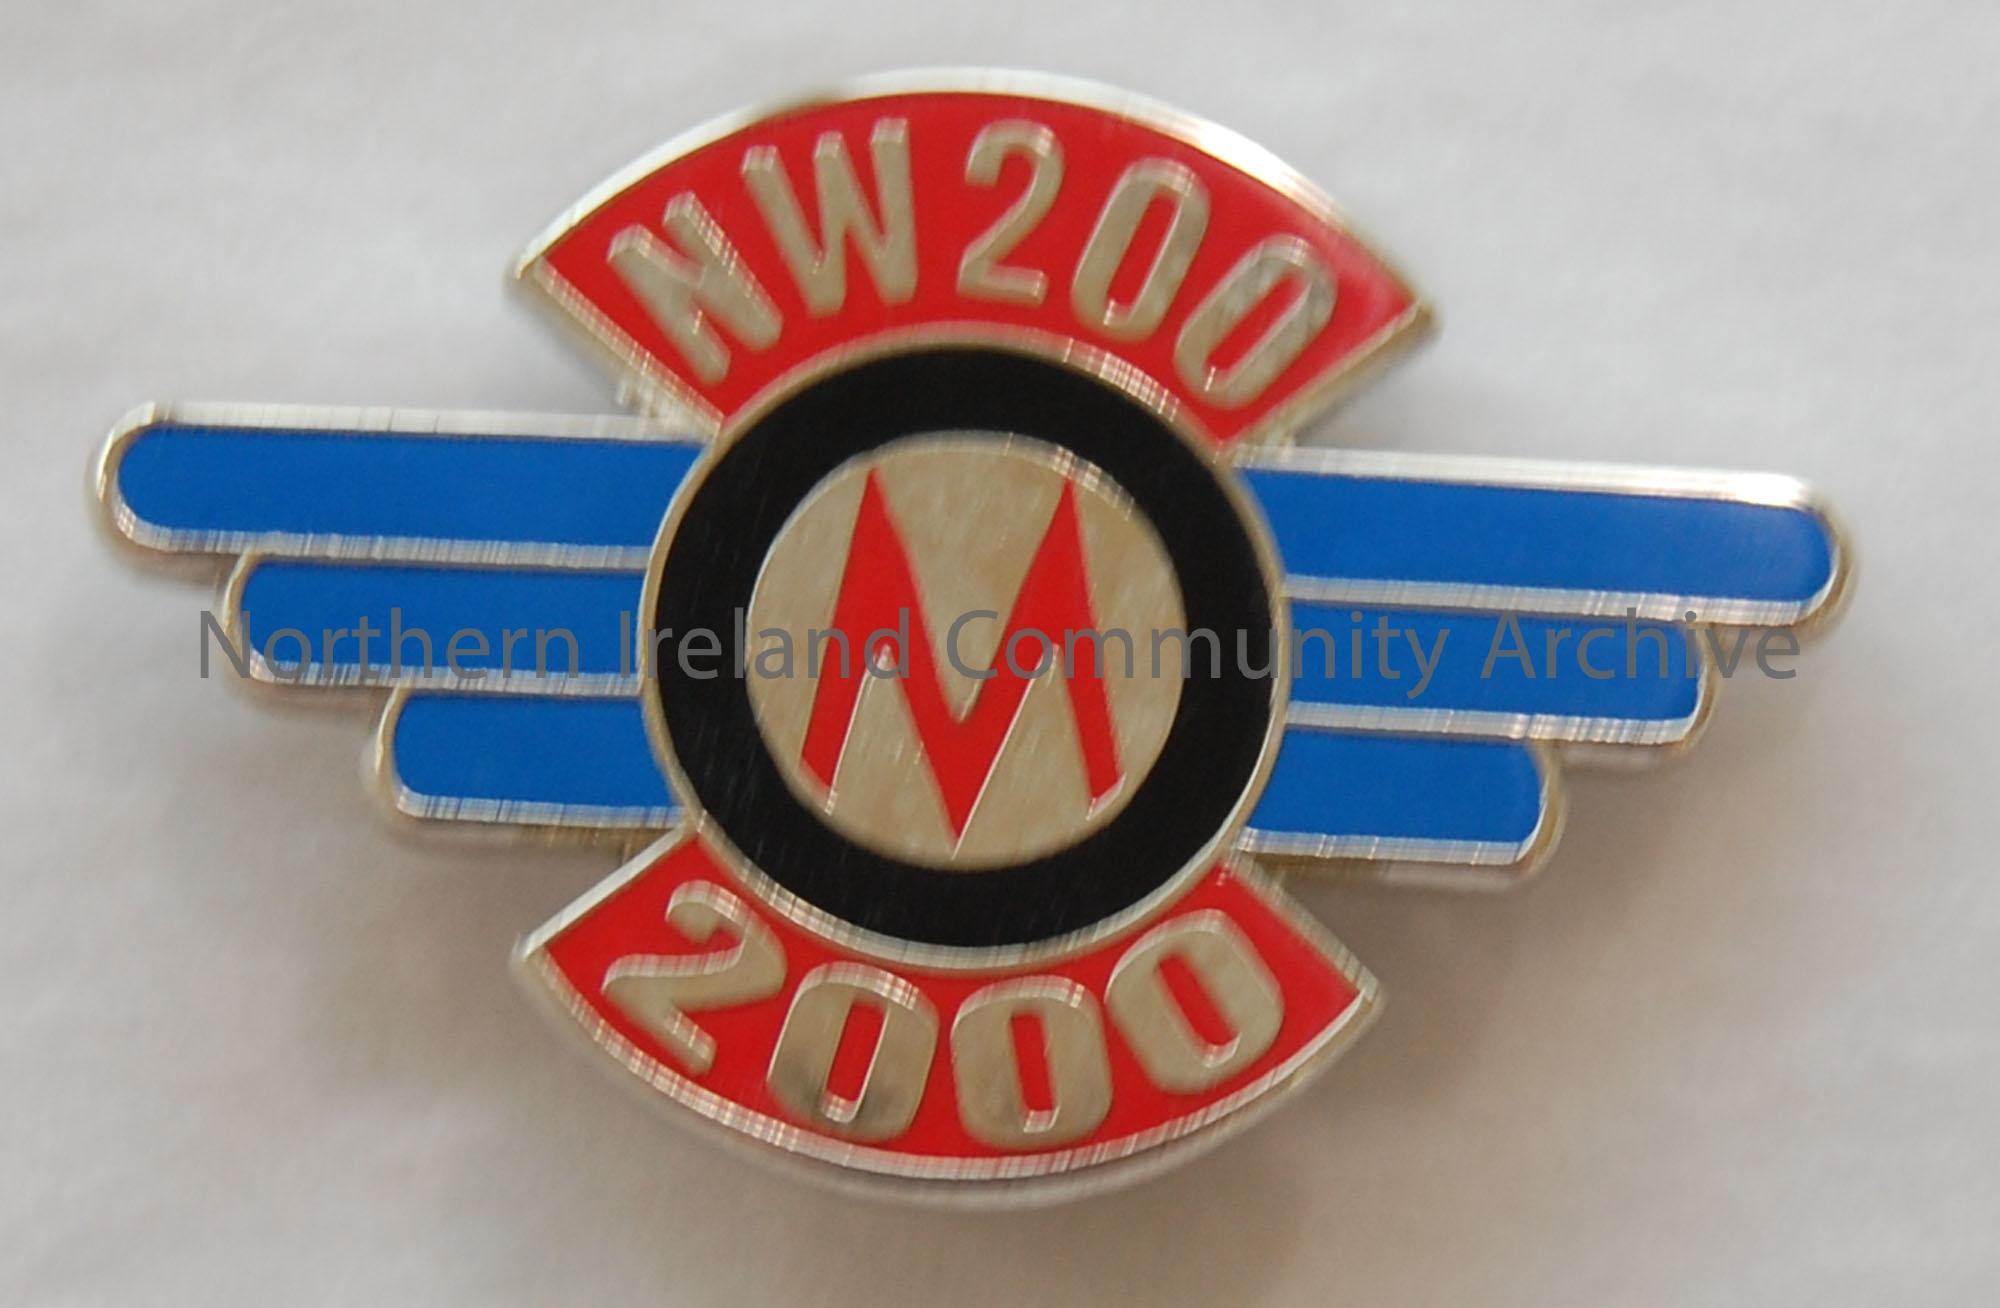 North West 200 badge, 2000